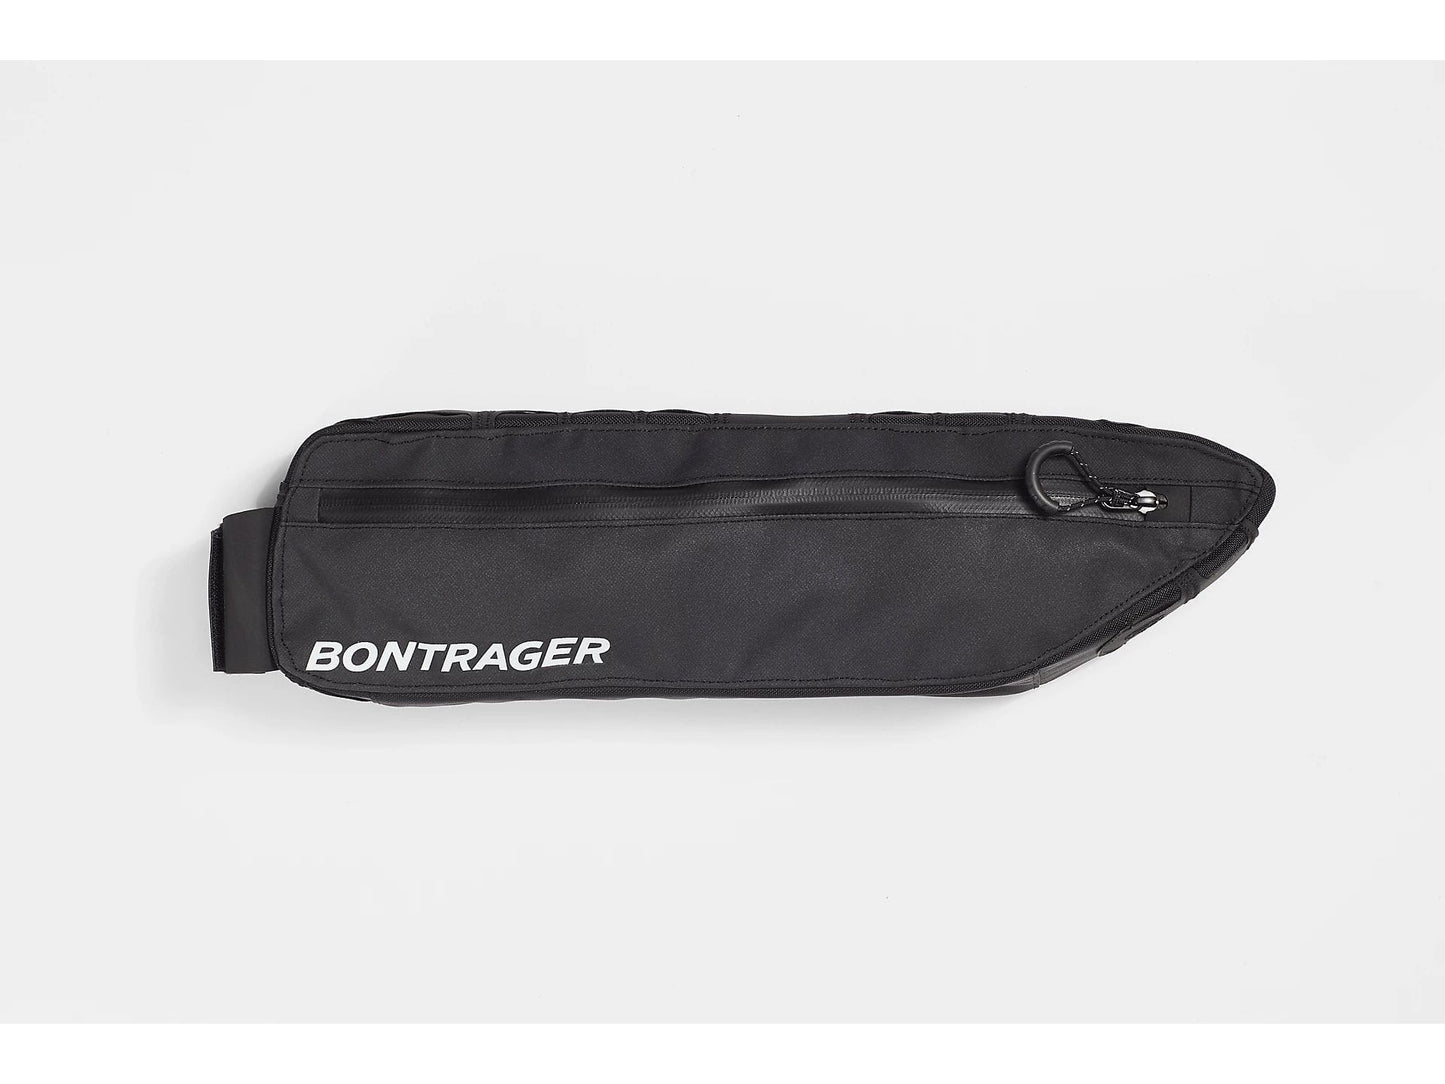 BONTRAGER ADVENTURE BOSS FRAME BAG  - 1.3 LITRE